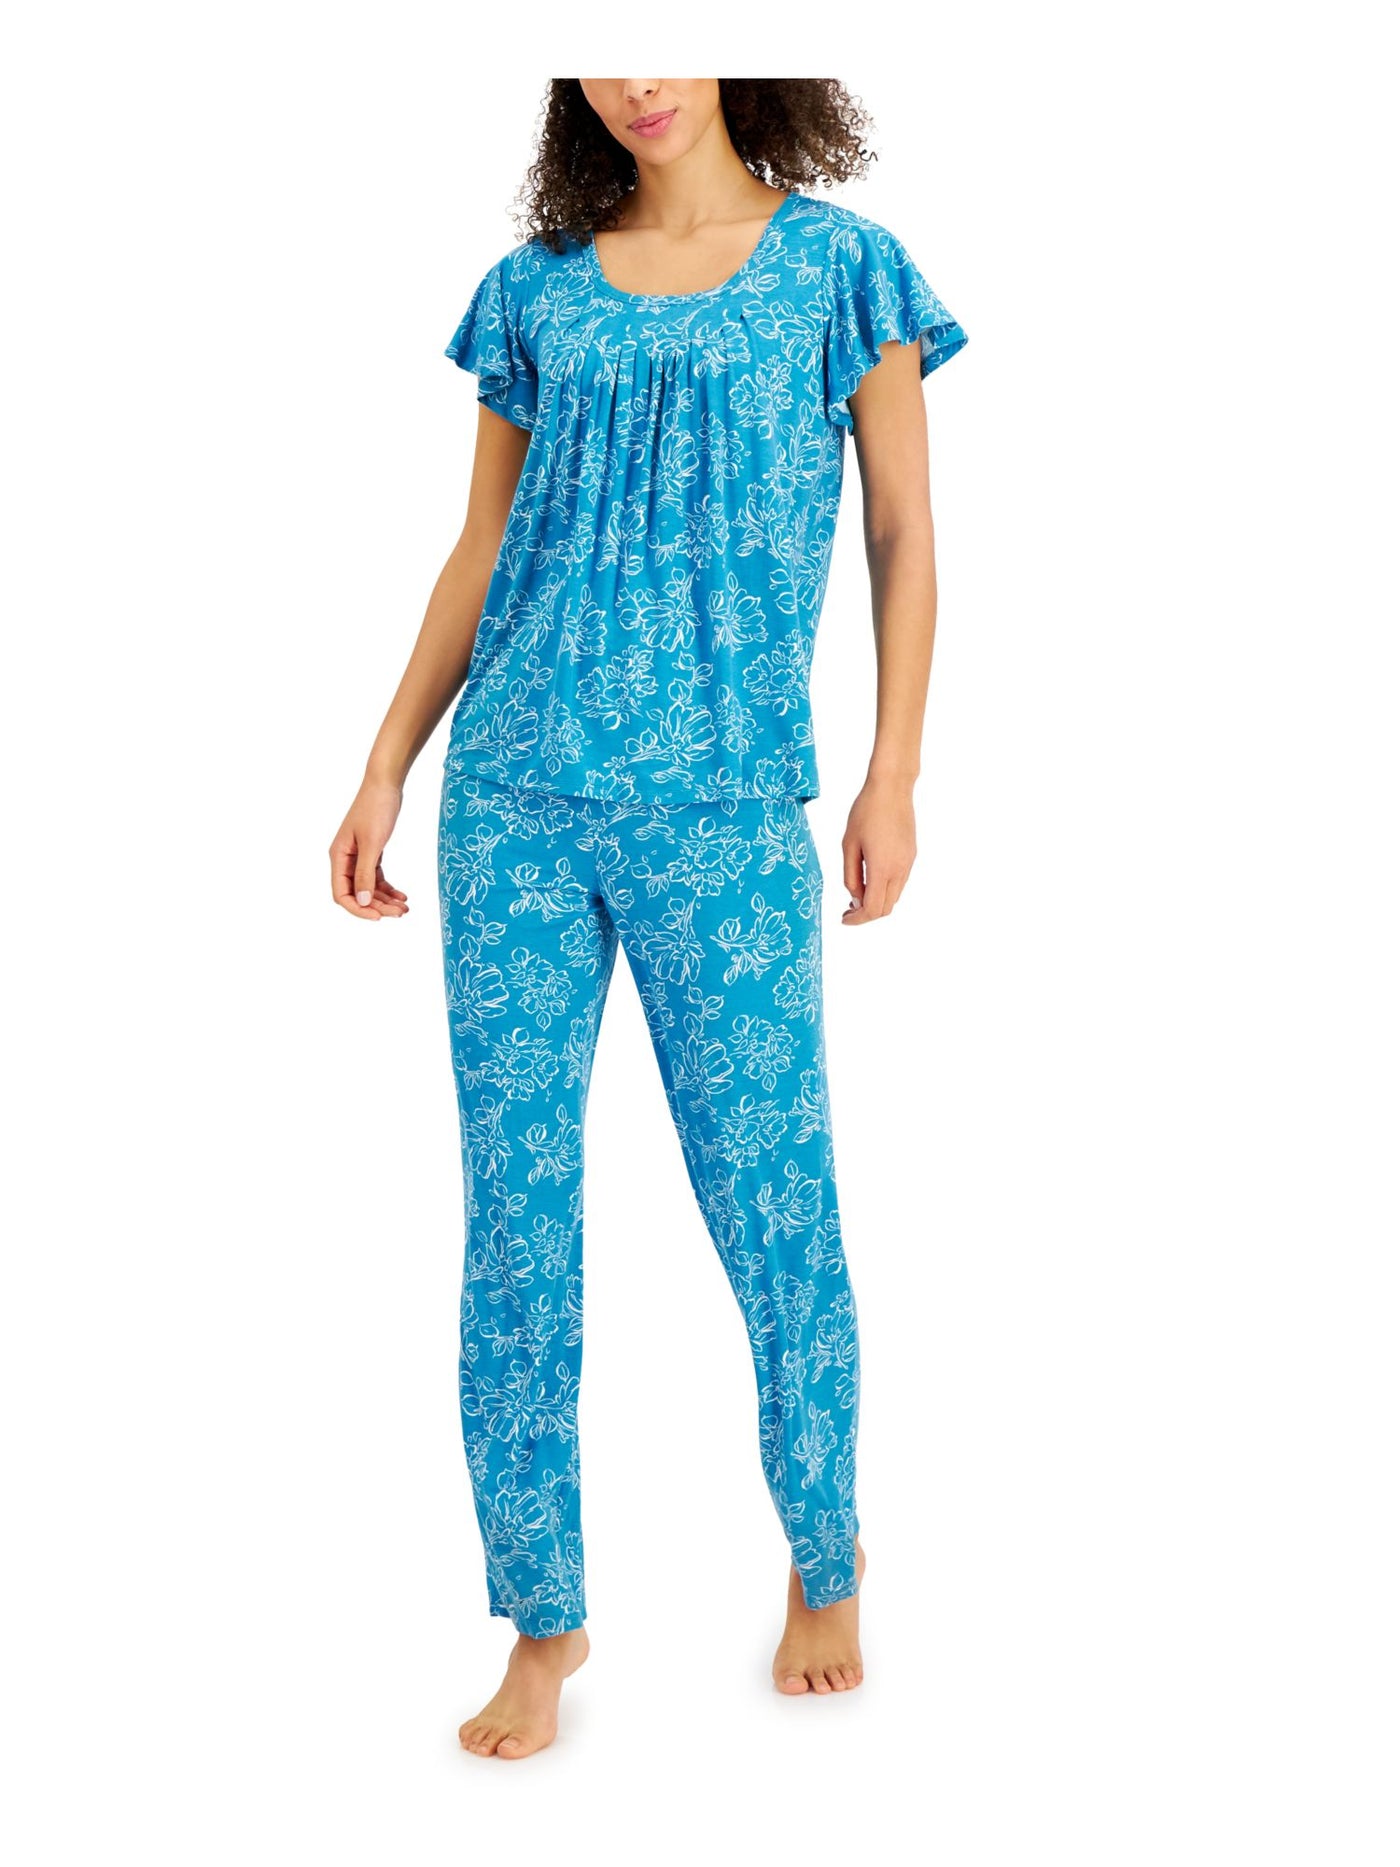 CHARTER CLUB Intimates Blue Pleated Floral Sleep Shirt Pajama Top M